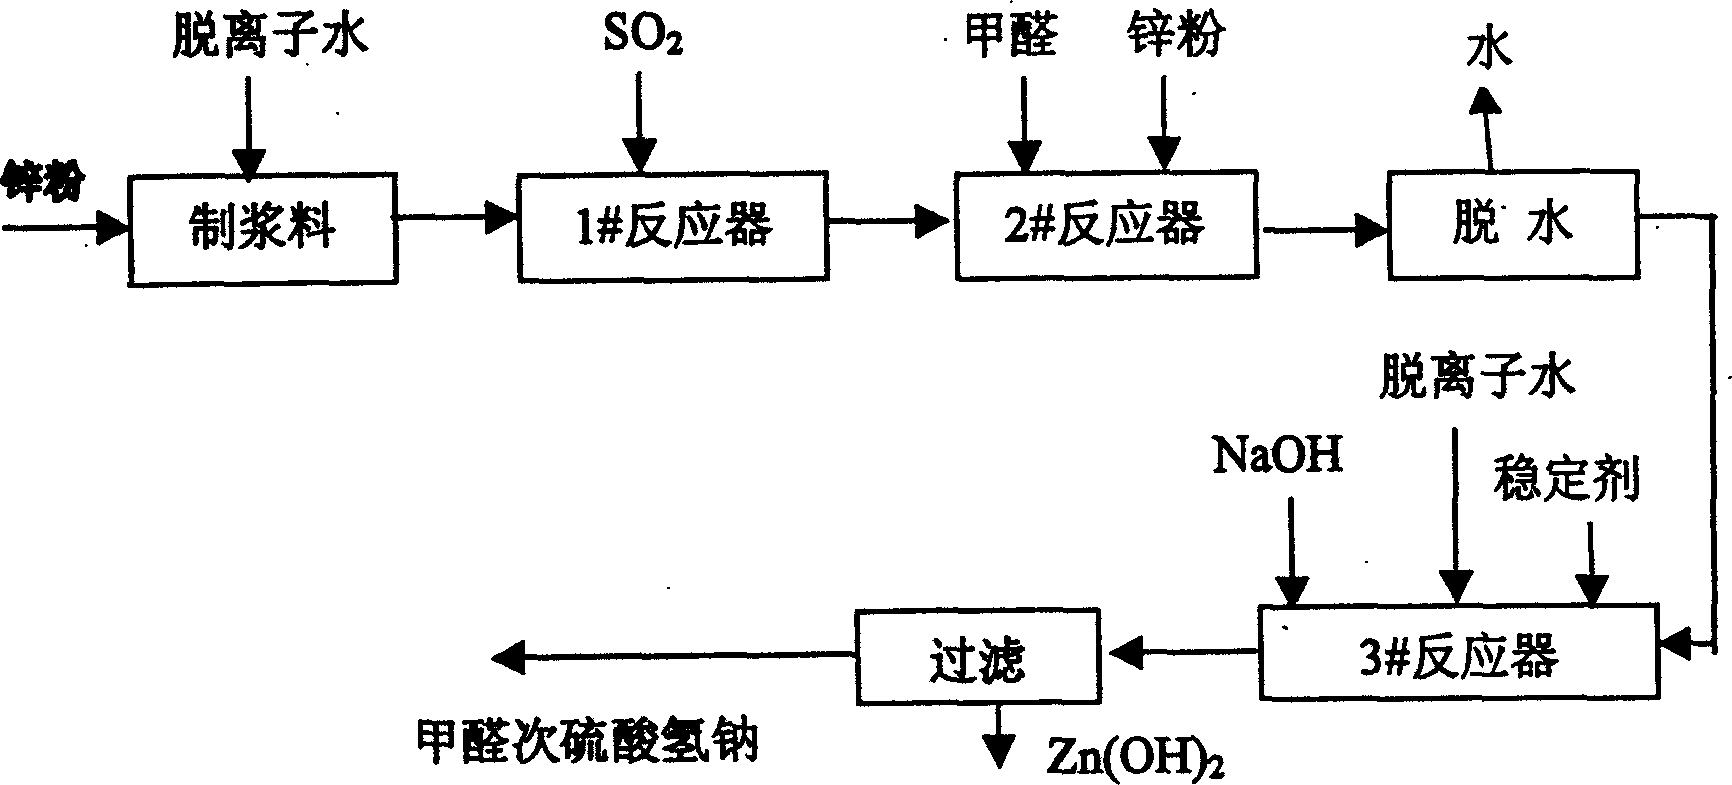 Improvement of production method of activating and modifying sodium bisulfoxylate formaldehyde